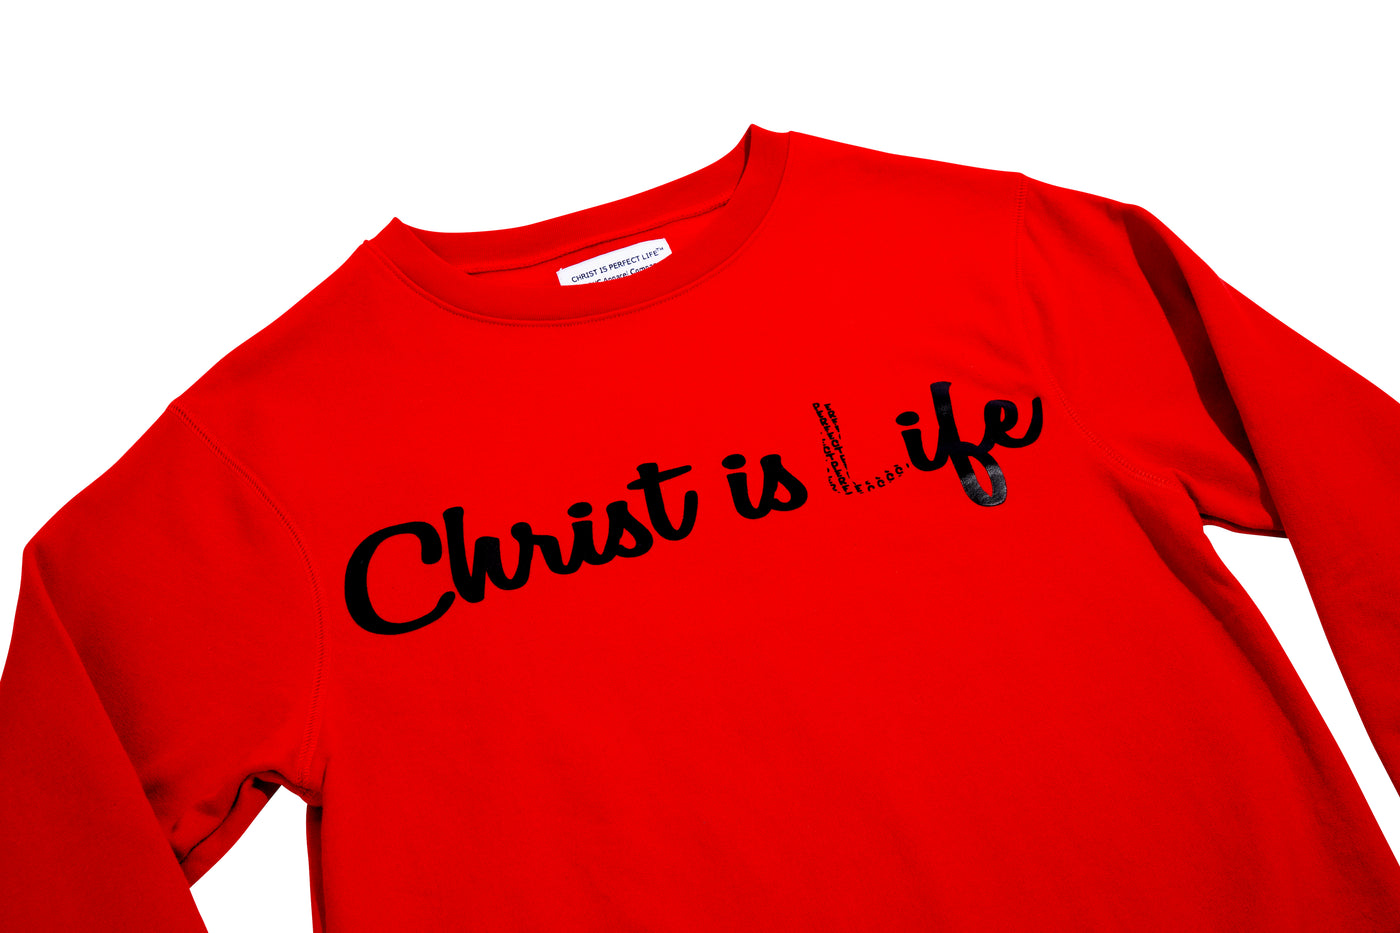 Christ is Perfect Life (The Genesis) Sweatshirt